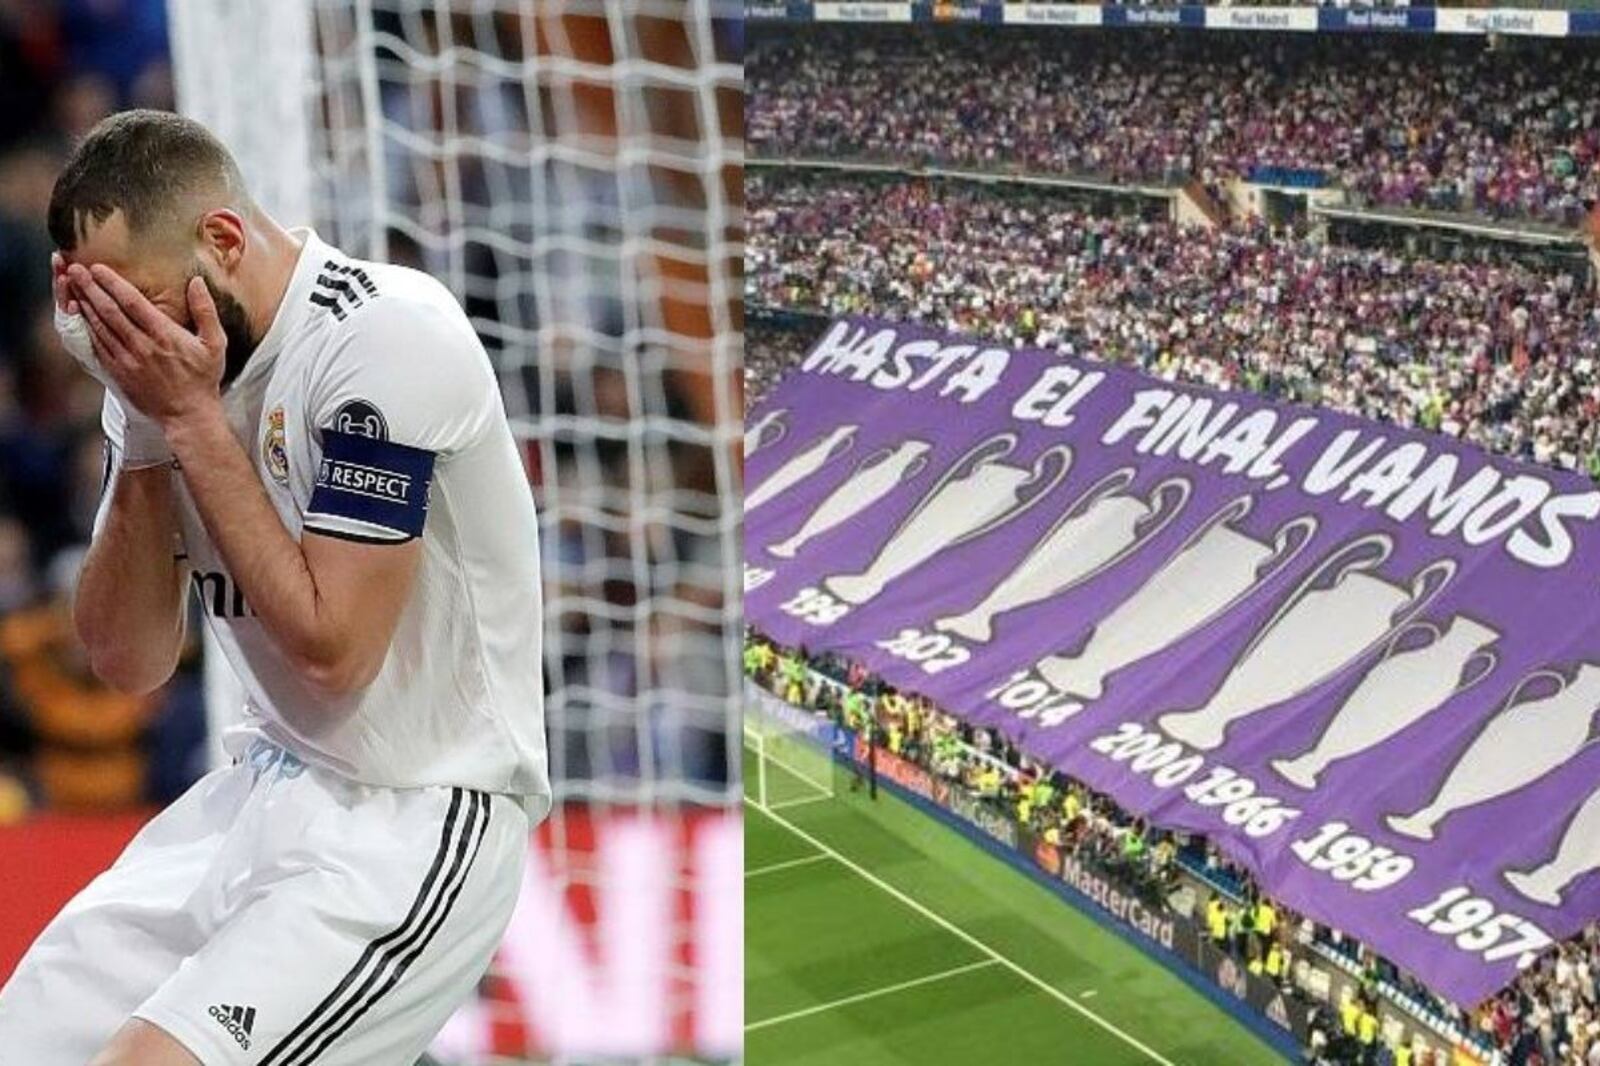 Despite defeating Rayo Vallecano, the worst news Real Madrid receives